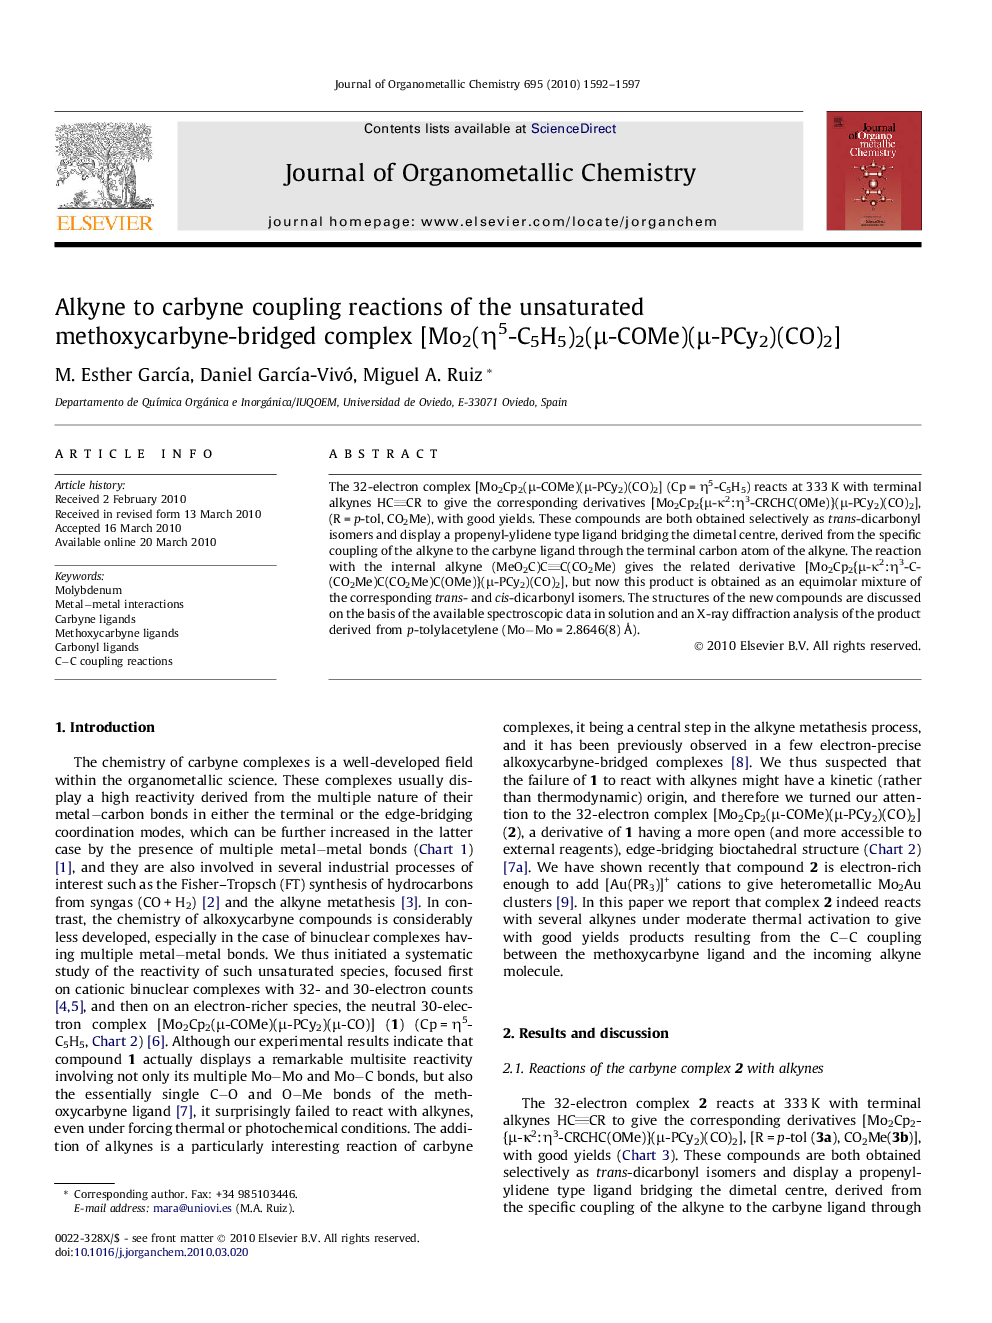 Alkyne to carbyne coupling reactions of the unsaturated methoxycarbyne-bridged complex [Mo2(Î·5-C5H5)2(Î¼-COMe)(Î¼-PCy2)(CO)2]